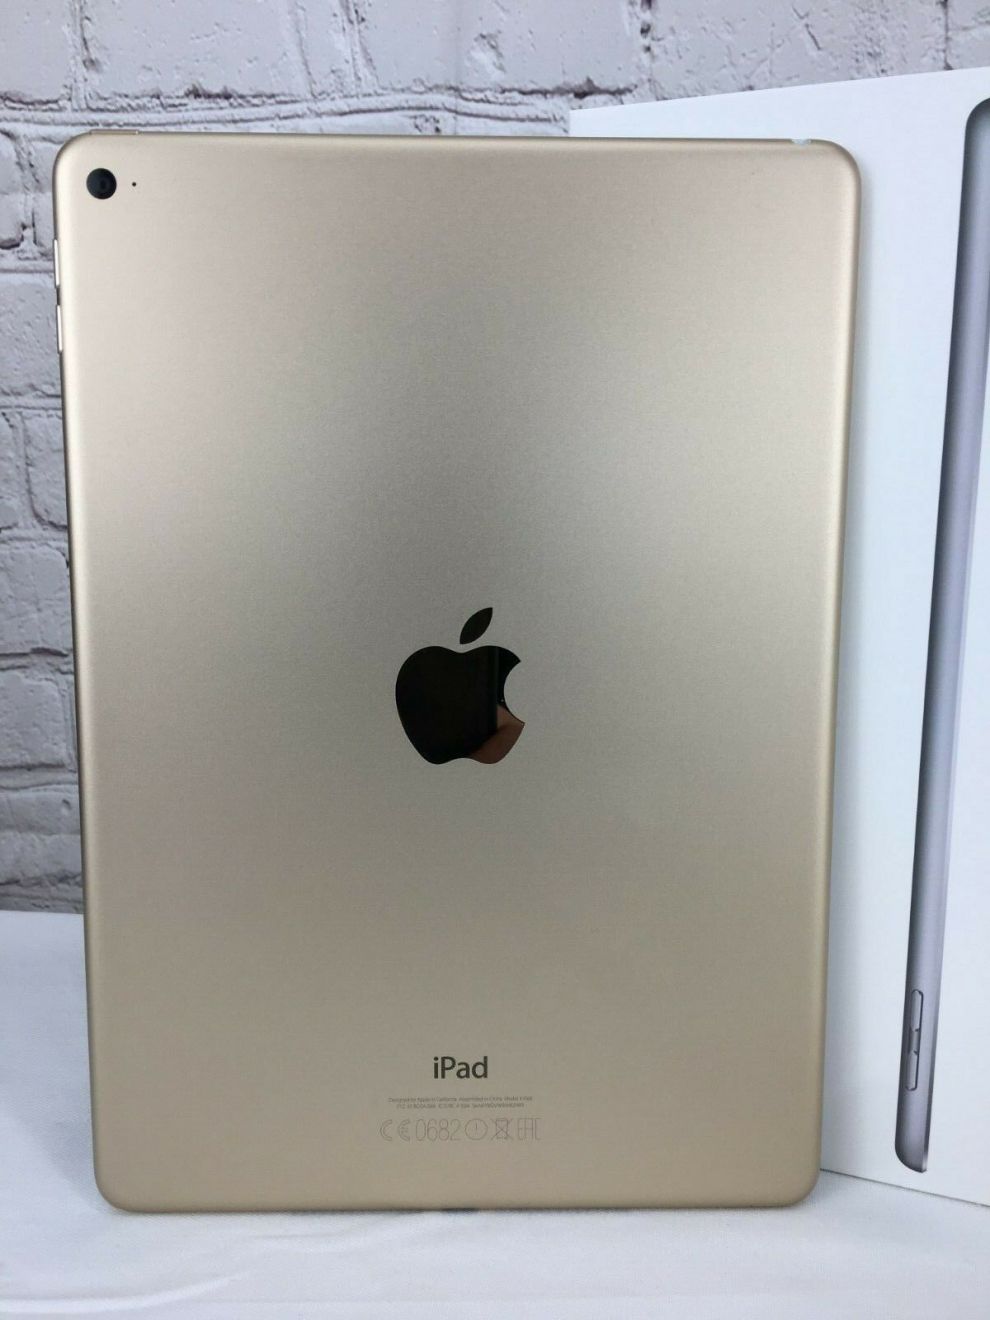 Apple iPad Air 2 16GB Gold, Wifi, A1566 MGLW2LL/A | MacKing